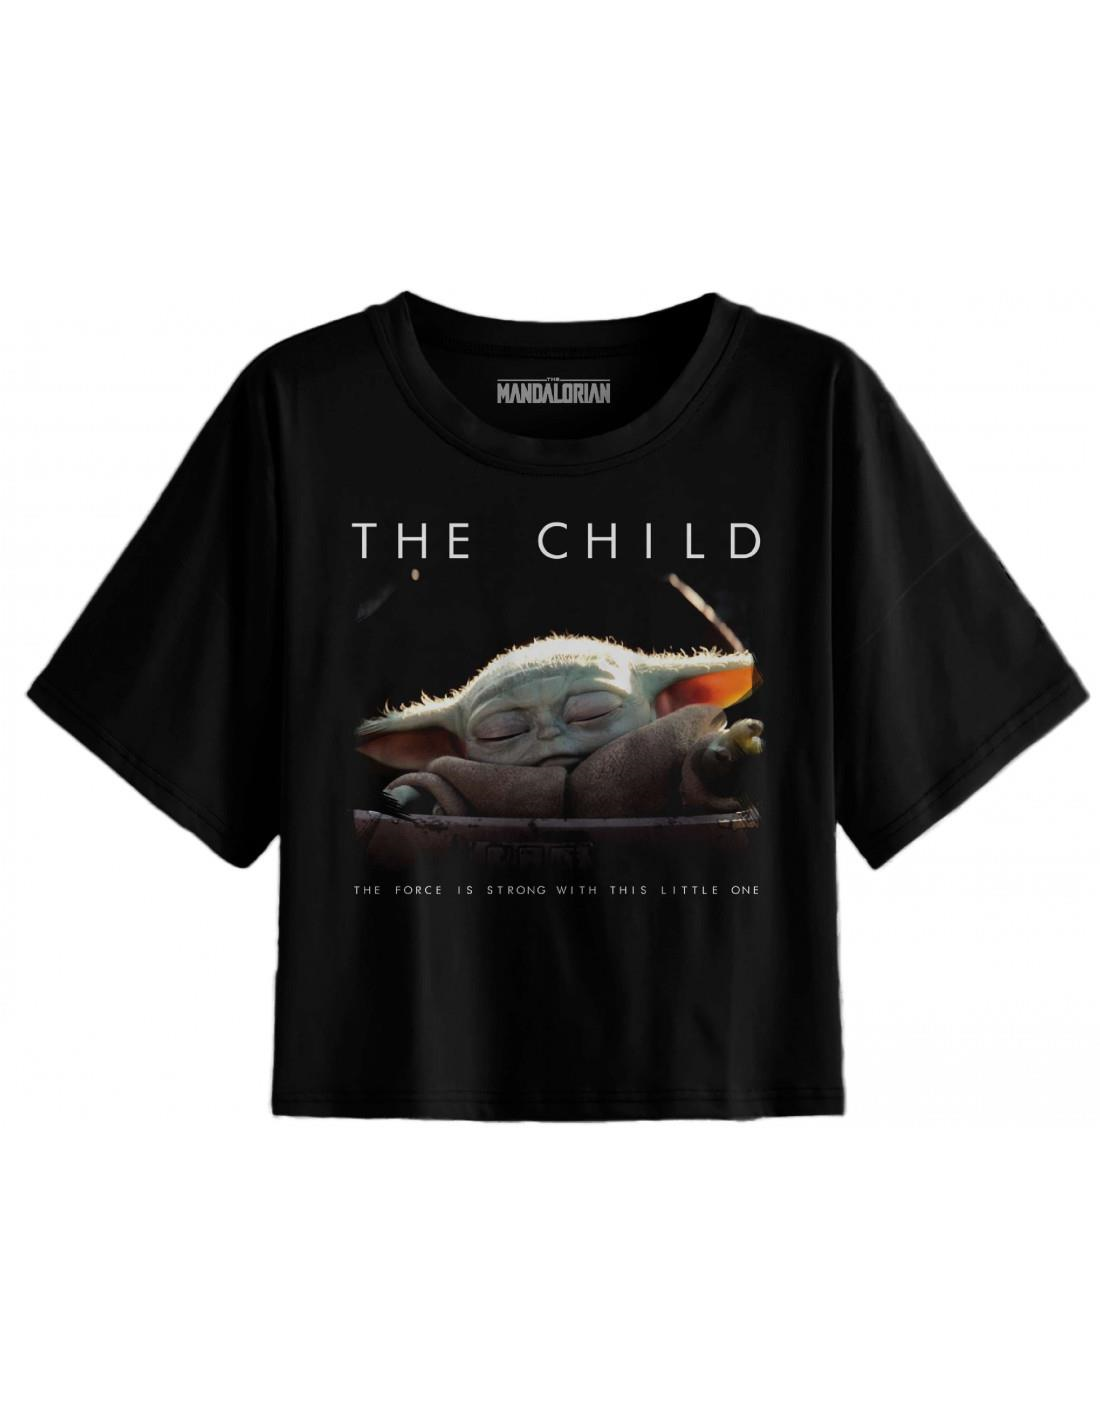 The Mandalorian - T-shirt Noir Femmes  The Child - S